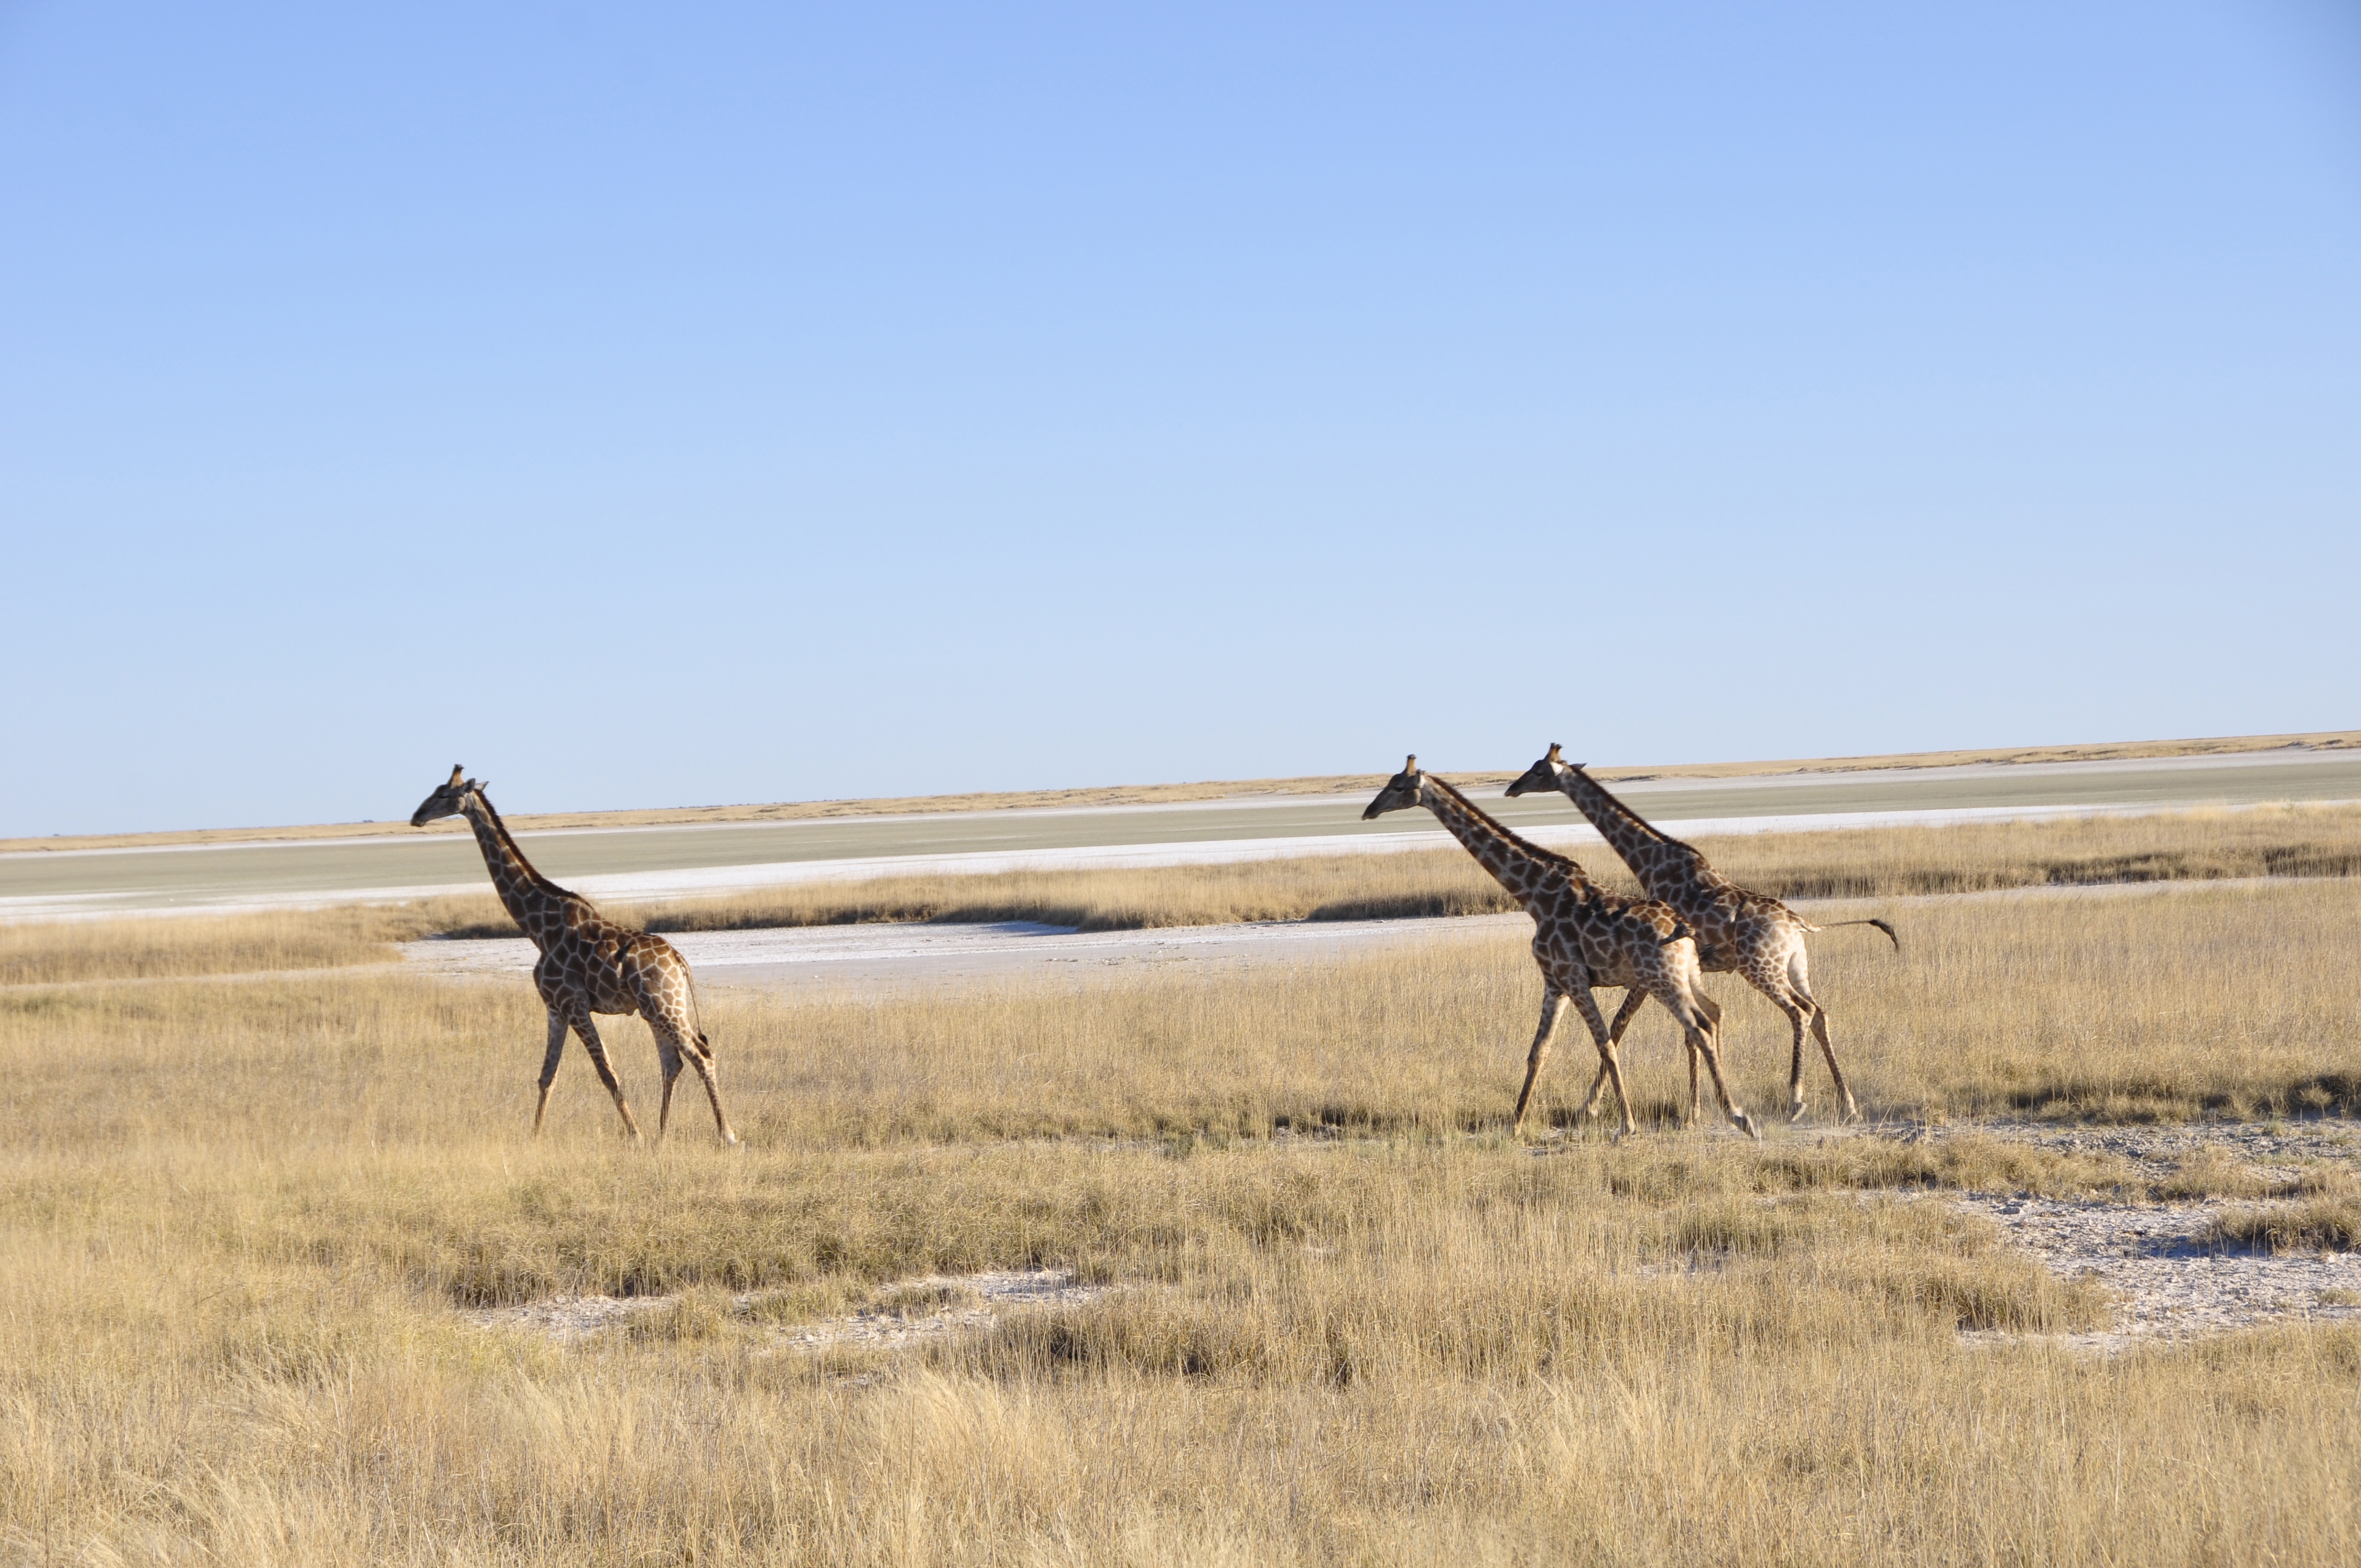 Namibia: Girafs at the boarder of the Etosha salt-pan